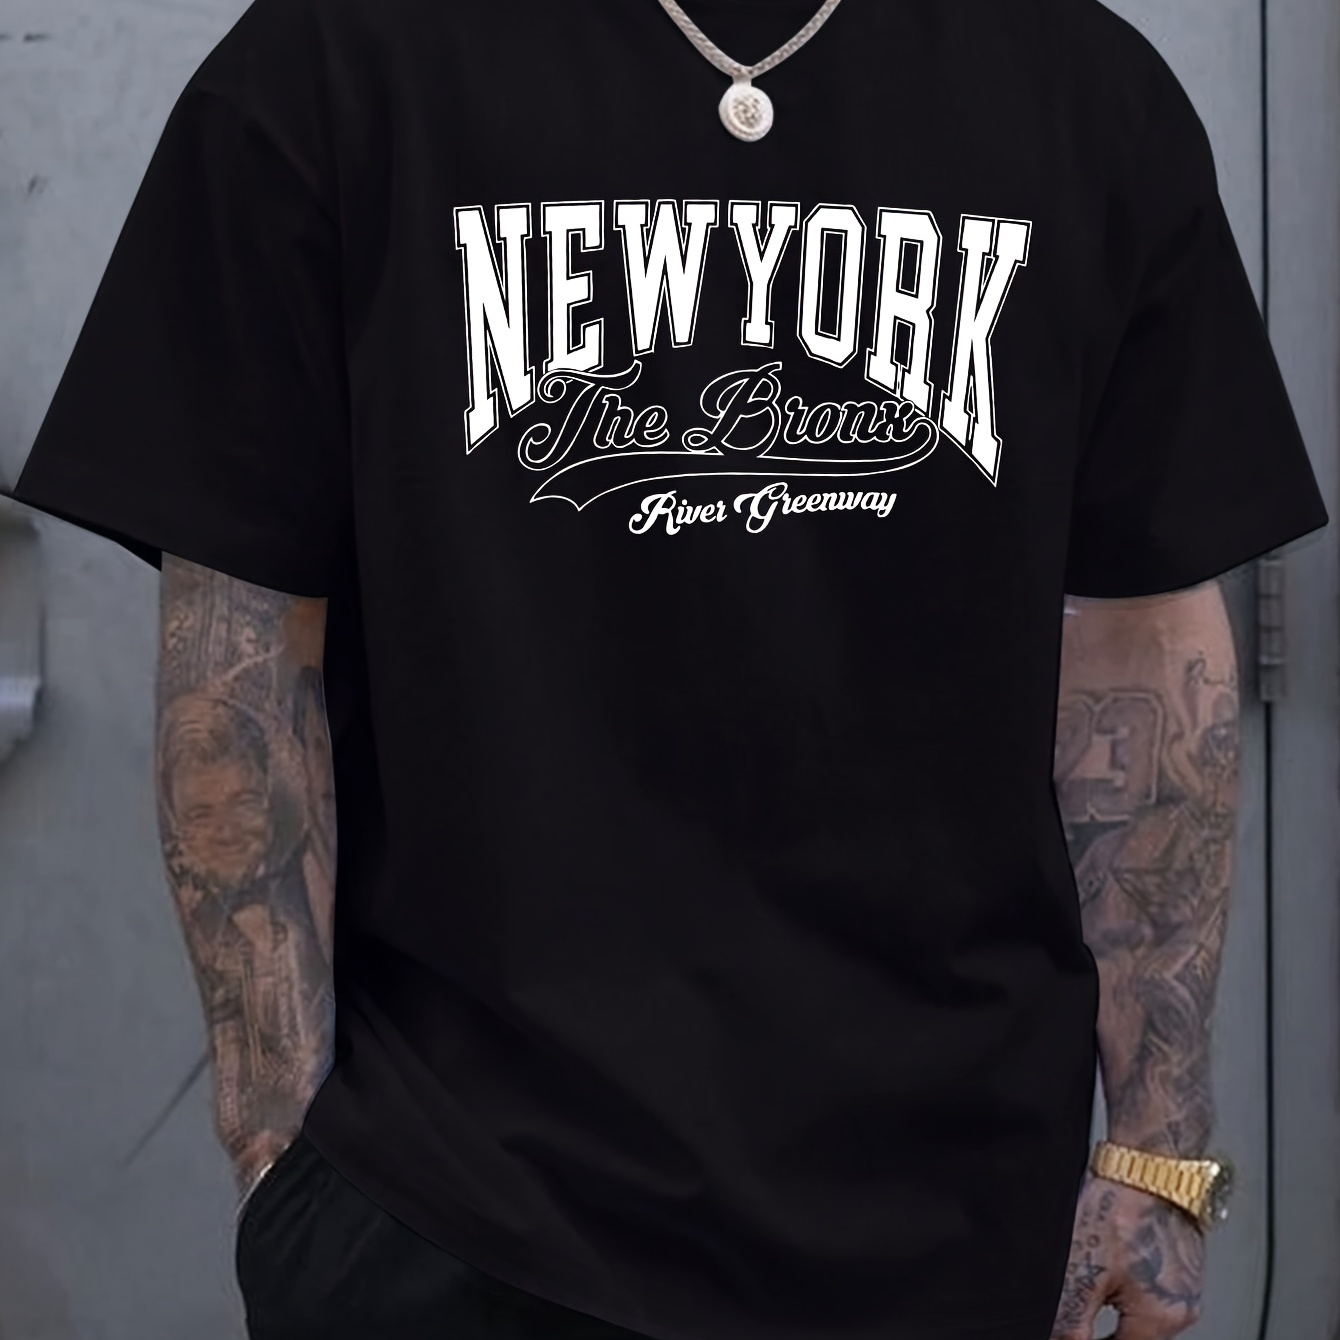 

New York Letter Print Men's Short Sleeve T-shirts, Comfy Casual Elastic Crew Neck Tops For Men's Outdoor Activities